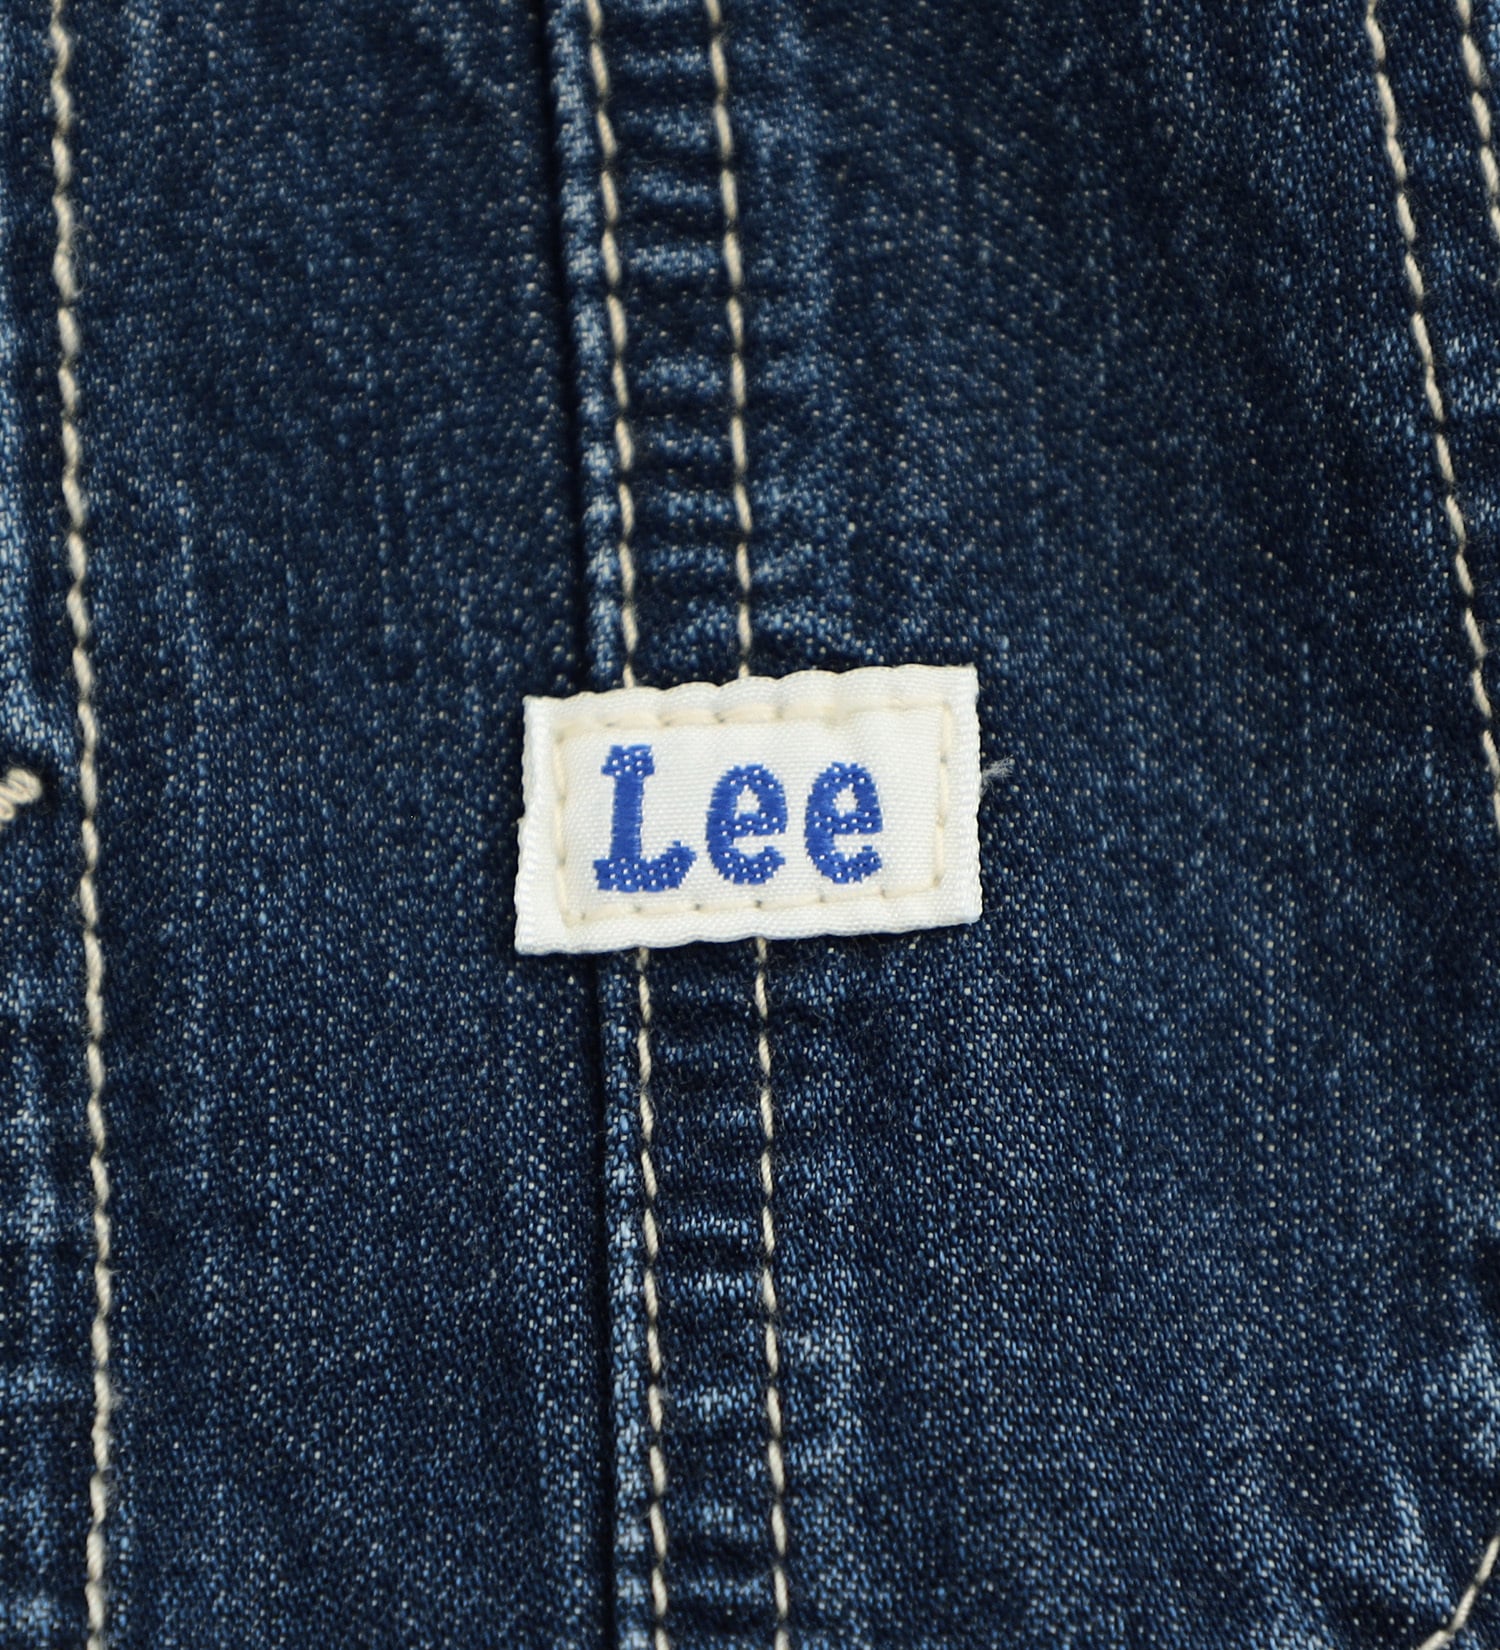 Lee(リー)の【80-100cm】ベビー オーバーオールスカート クレイジーパターン|オールインワン/ジャンパースカート/キッズ|リメイク